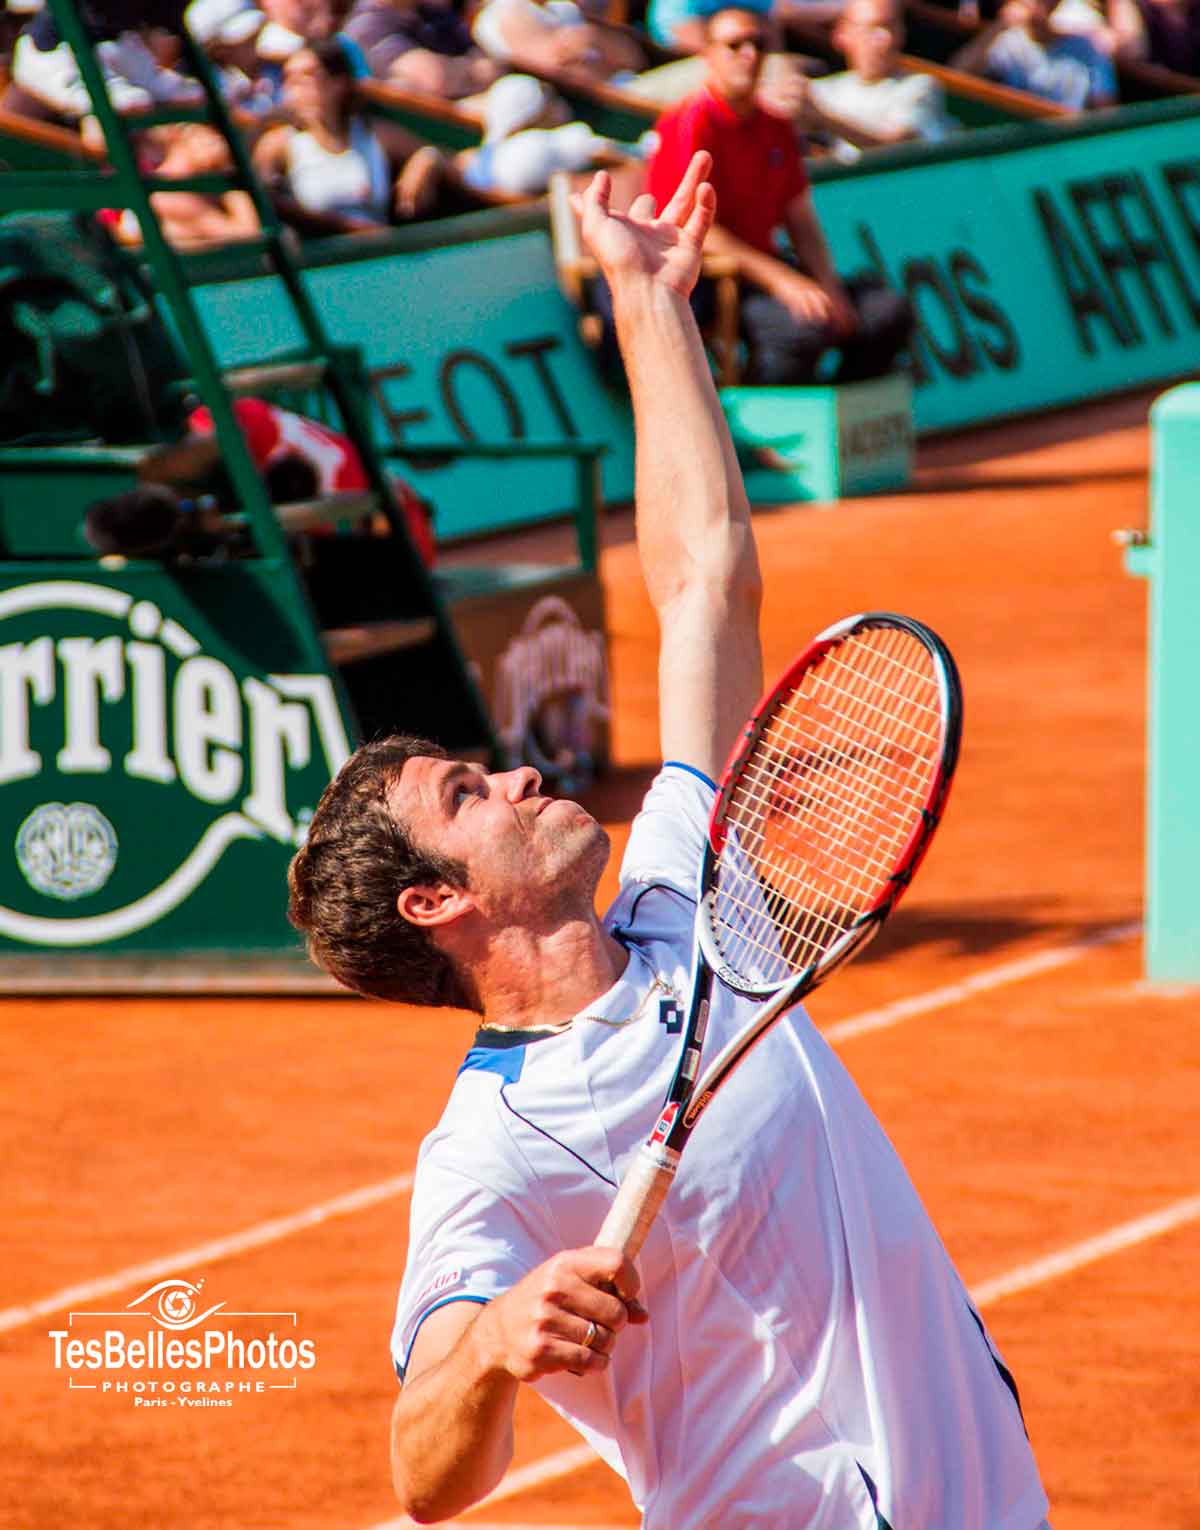 Photographe de sport tennis, photo reportage tennis